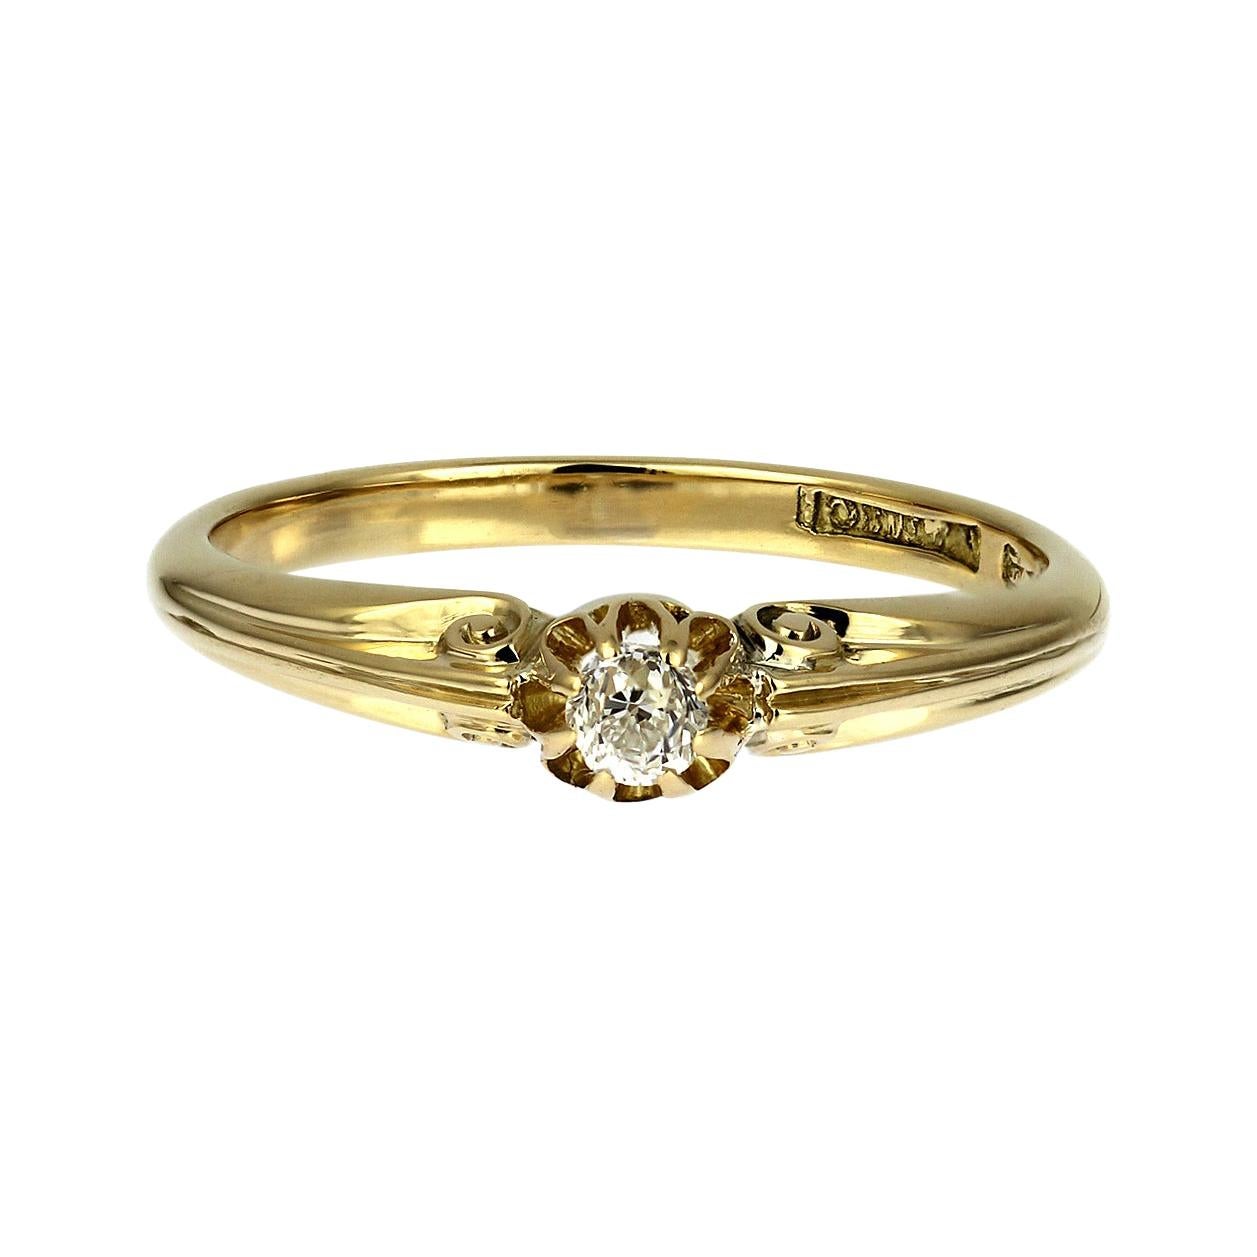 Antique Old European Cut Diamond Ring, Handmade in 18-K Yellow Gold 